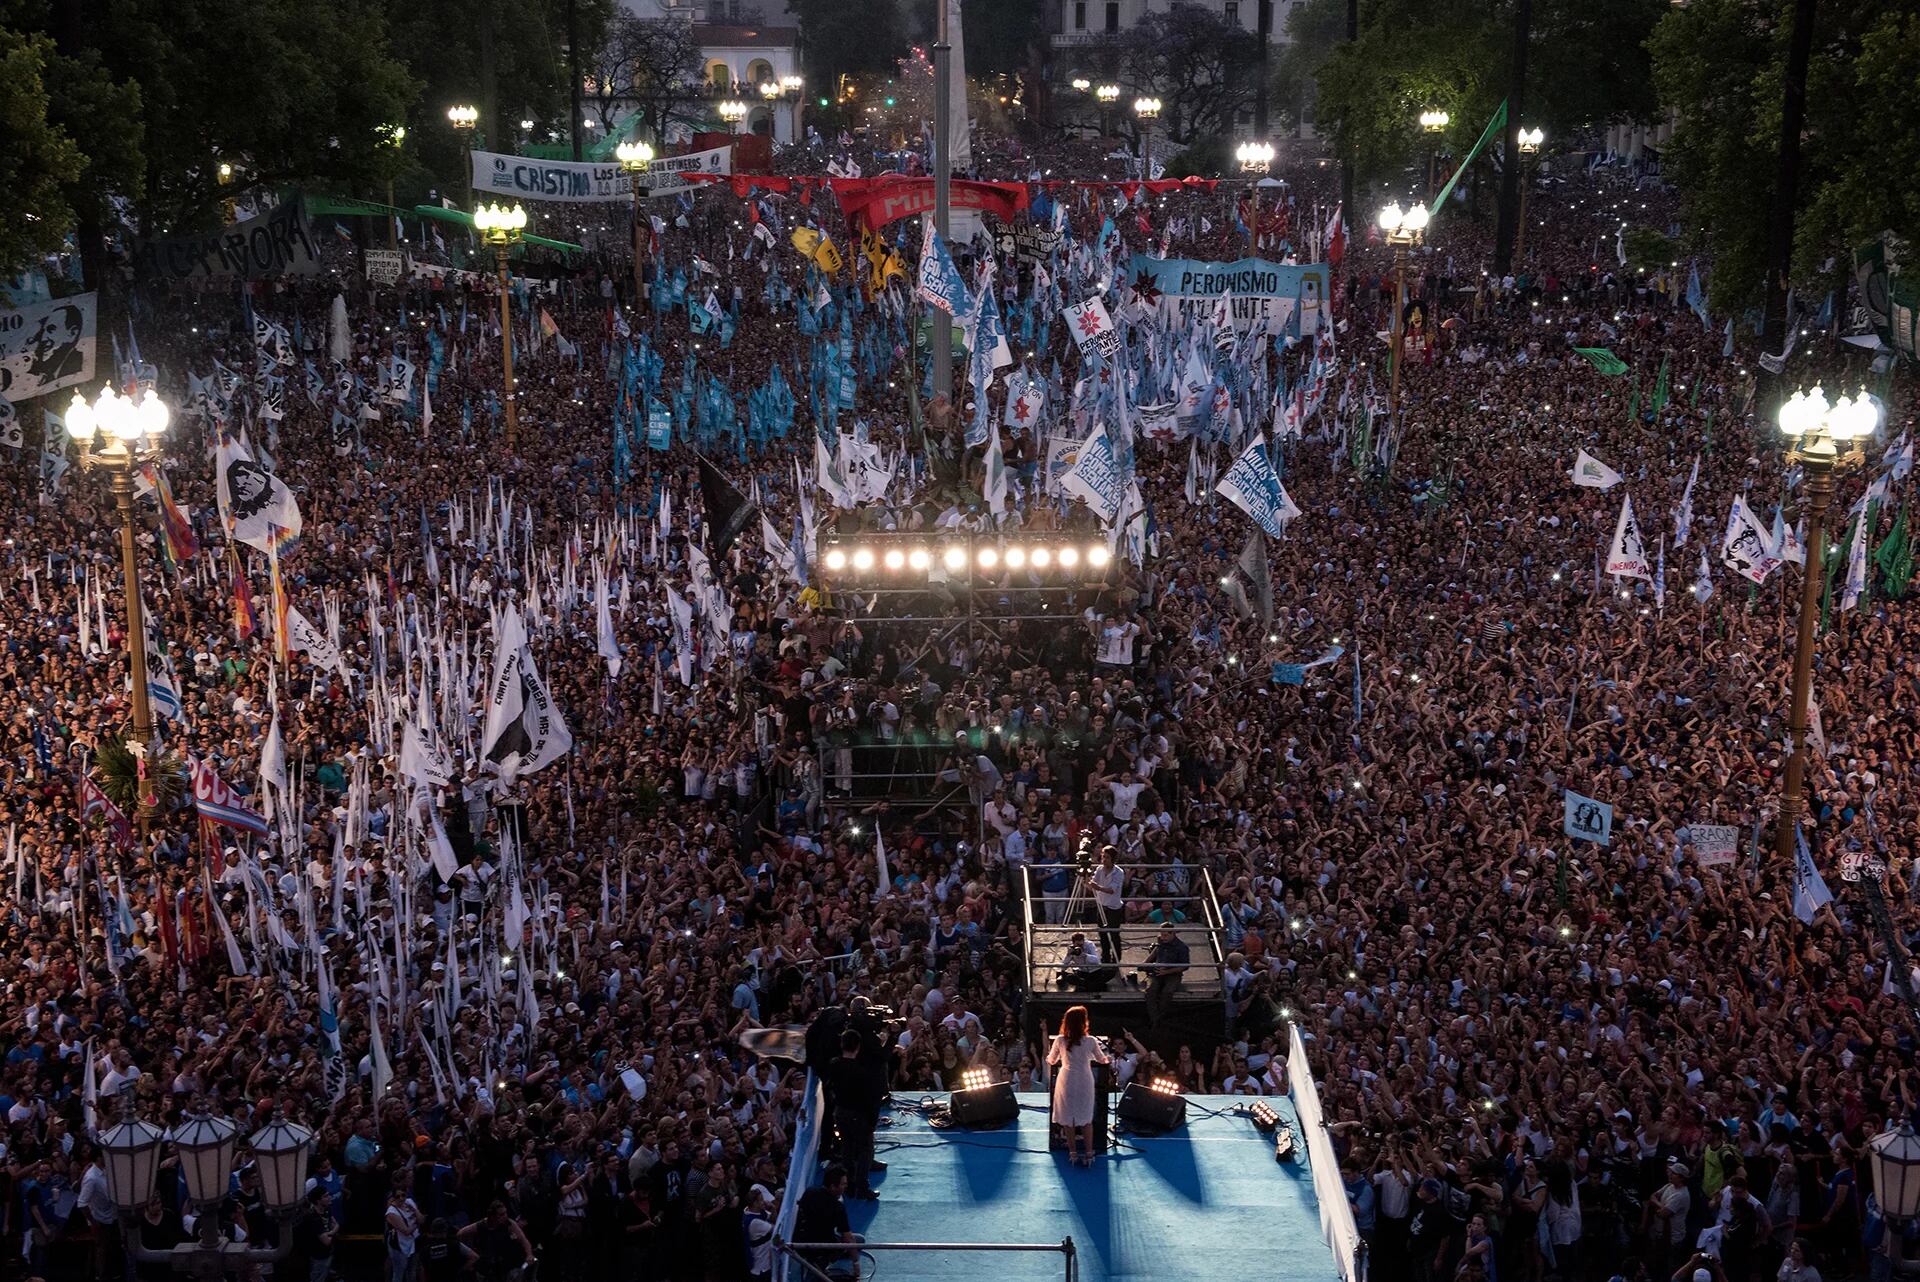 La presidenta Cristina Fernandez de Kirchner da su ultimo discurso en la Plaza de Mayo (Maria Eugenia Cerruti)